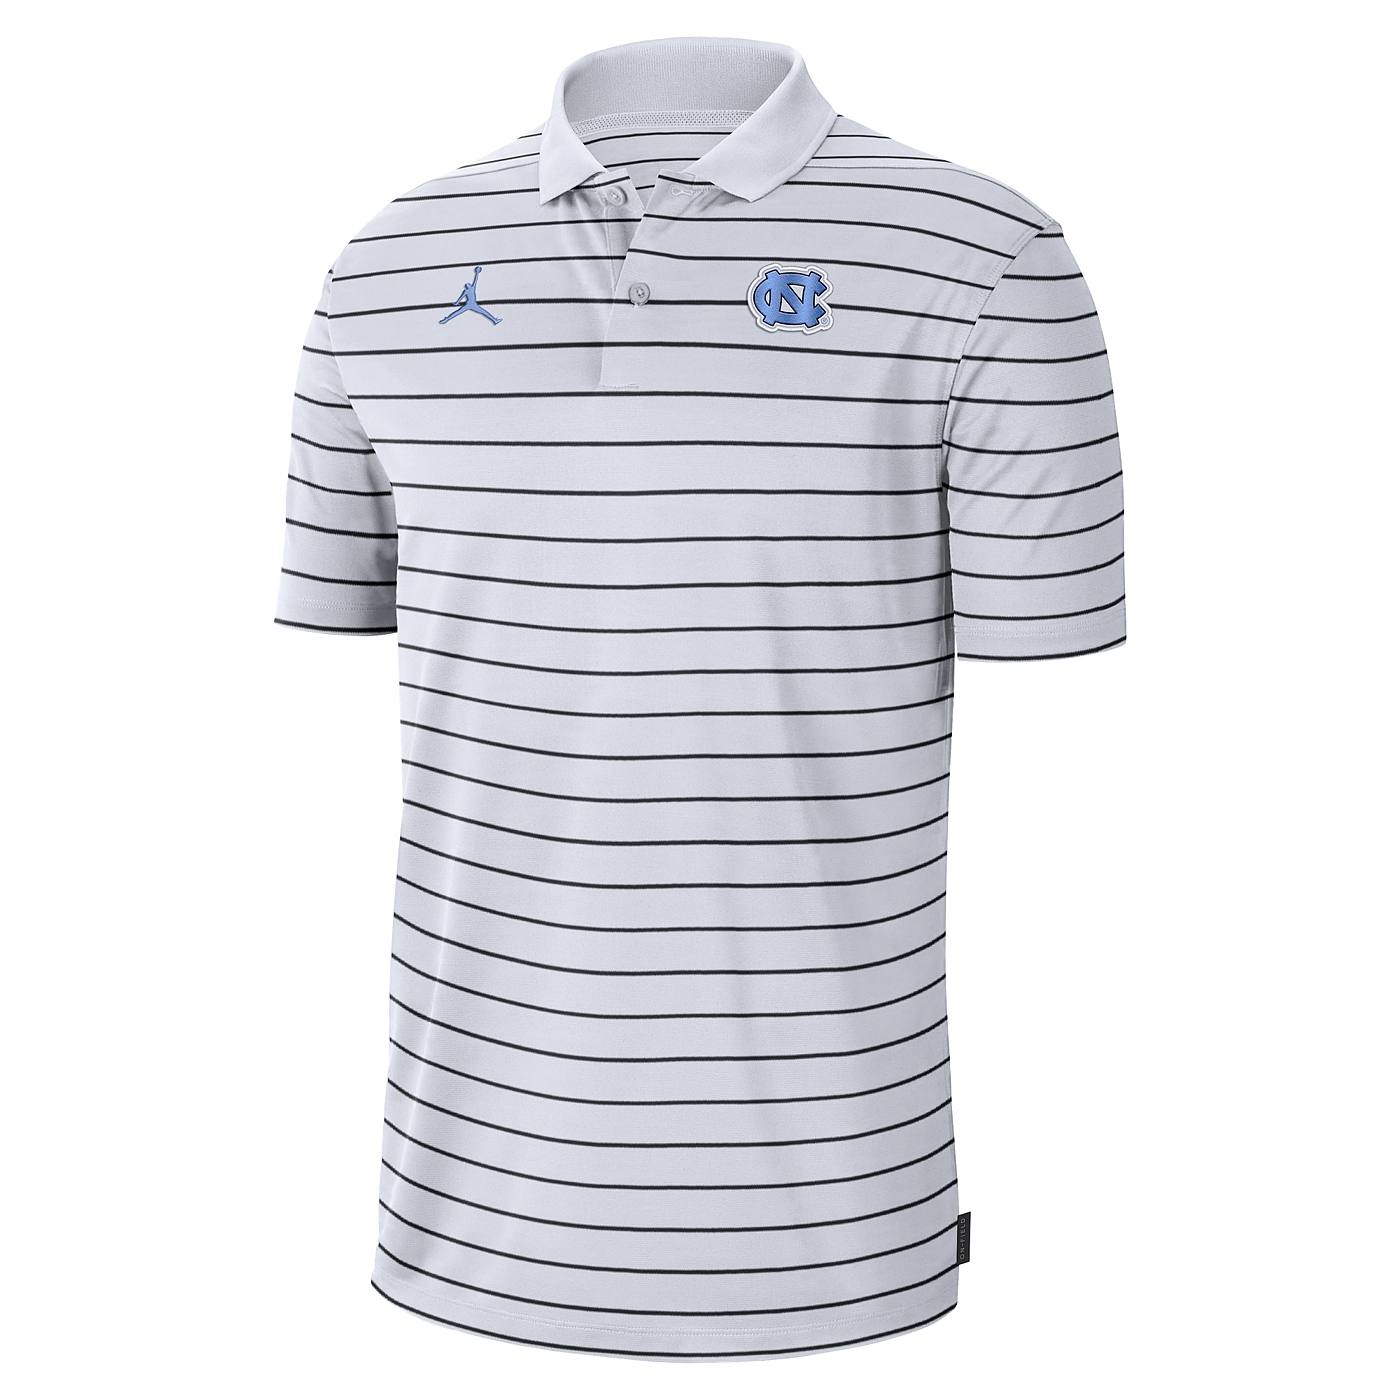 Johnny T-shirt - North Carolina Tar Heels - Nike Victory Stripe Coaches Polo  (White) by Nike